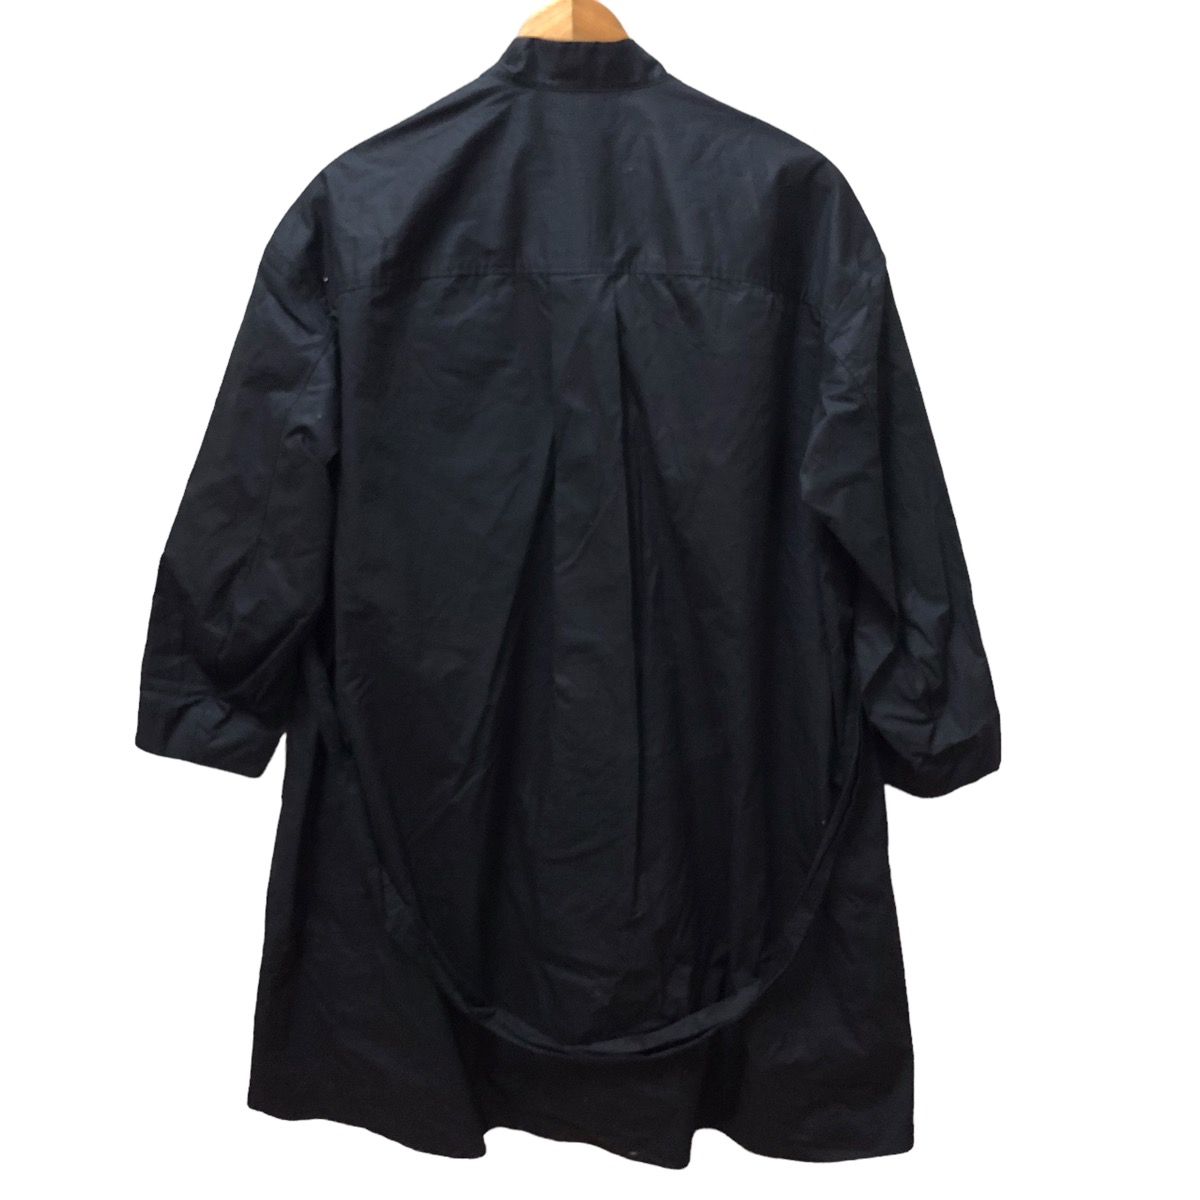 Uniqlo - Uniqlo x jil sander J+ long black jacket - 2